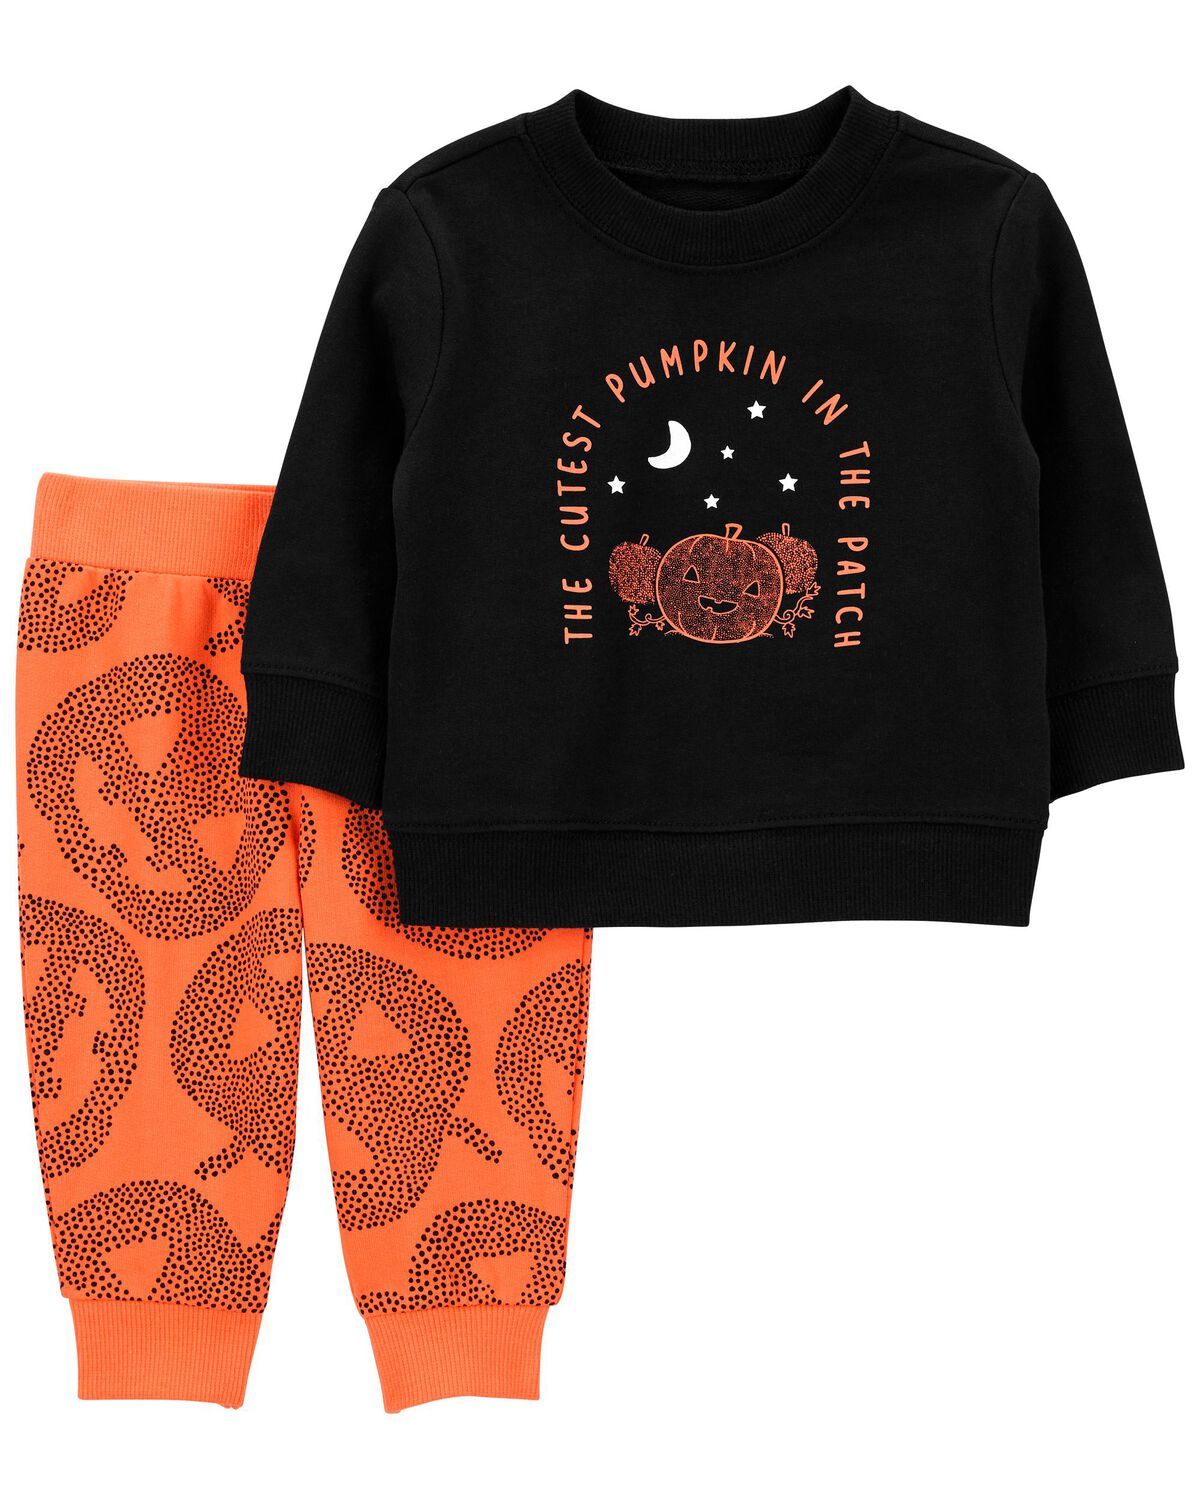 Black/Orange Baby 2-Piece Halloween Pumpkin Outfit Set | carters.com | Carter's